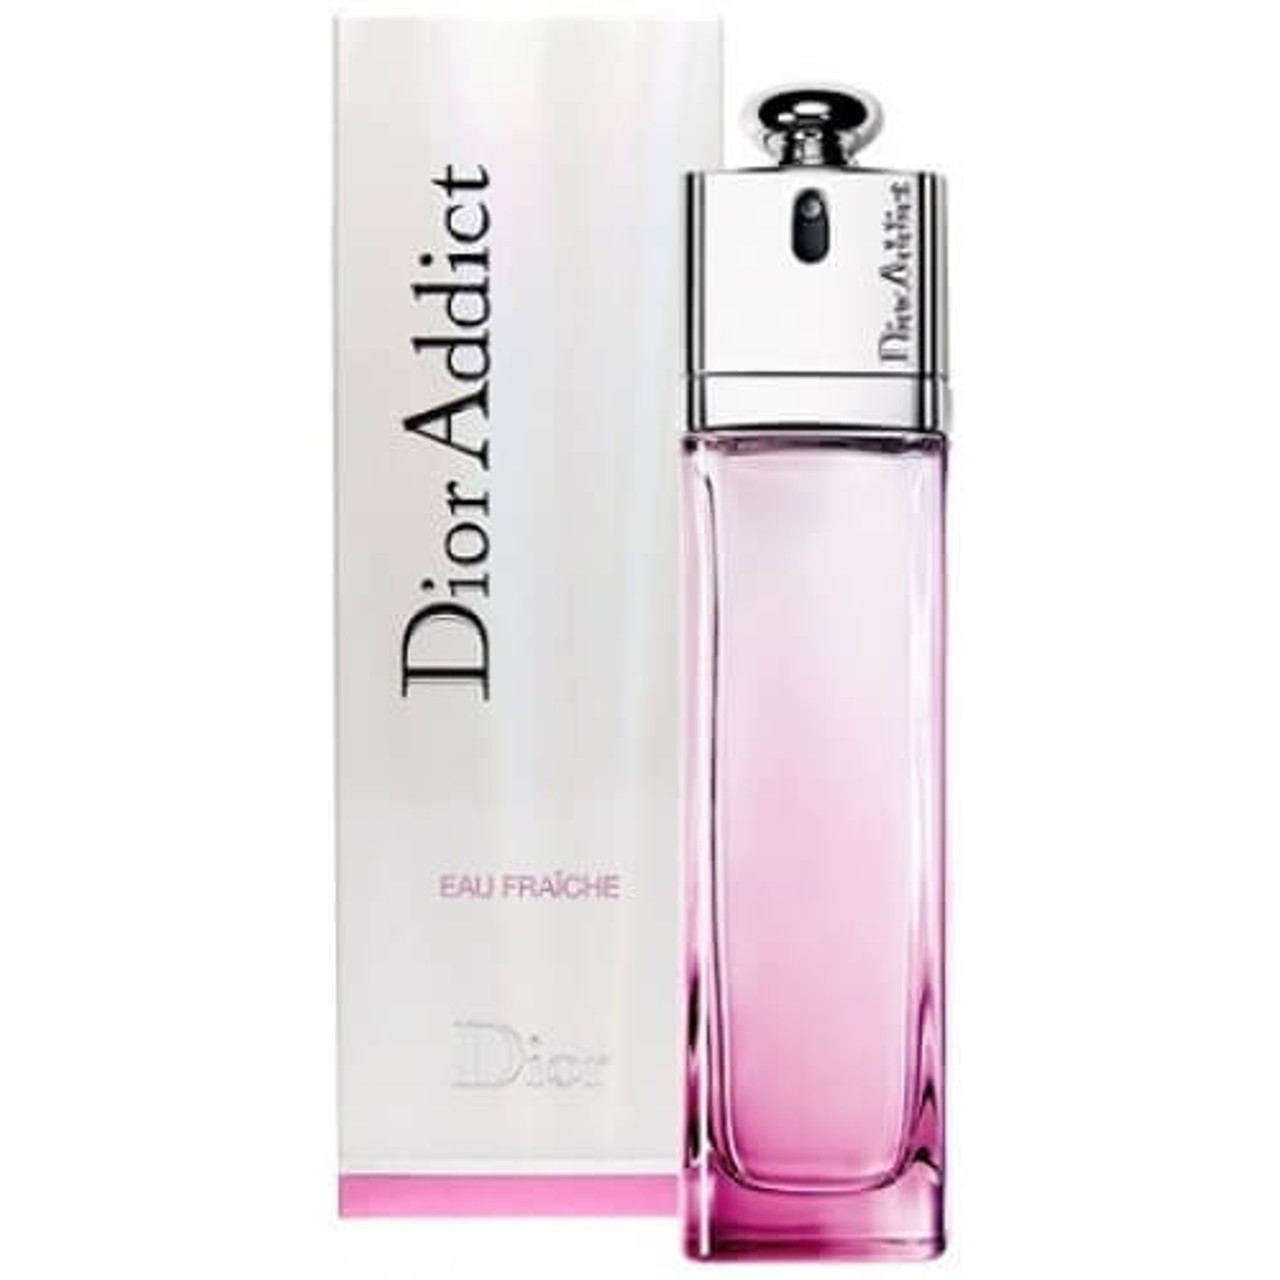 Dior Christian Dior Ladies Eau Fraiche EDT Spray 3.4 oz Fragrances  3348900082731 - Fragrances & Beauty, Eau Fraiche - Jomashop